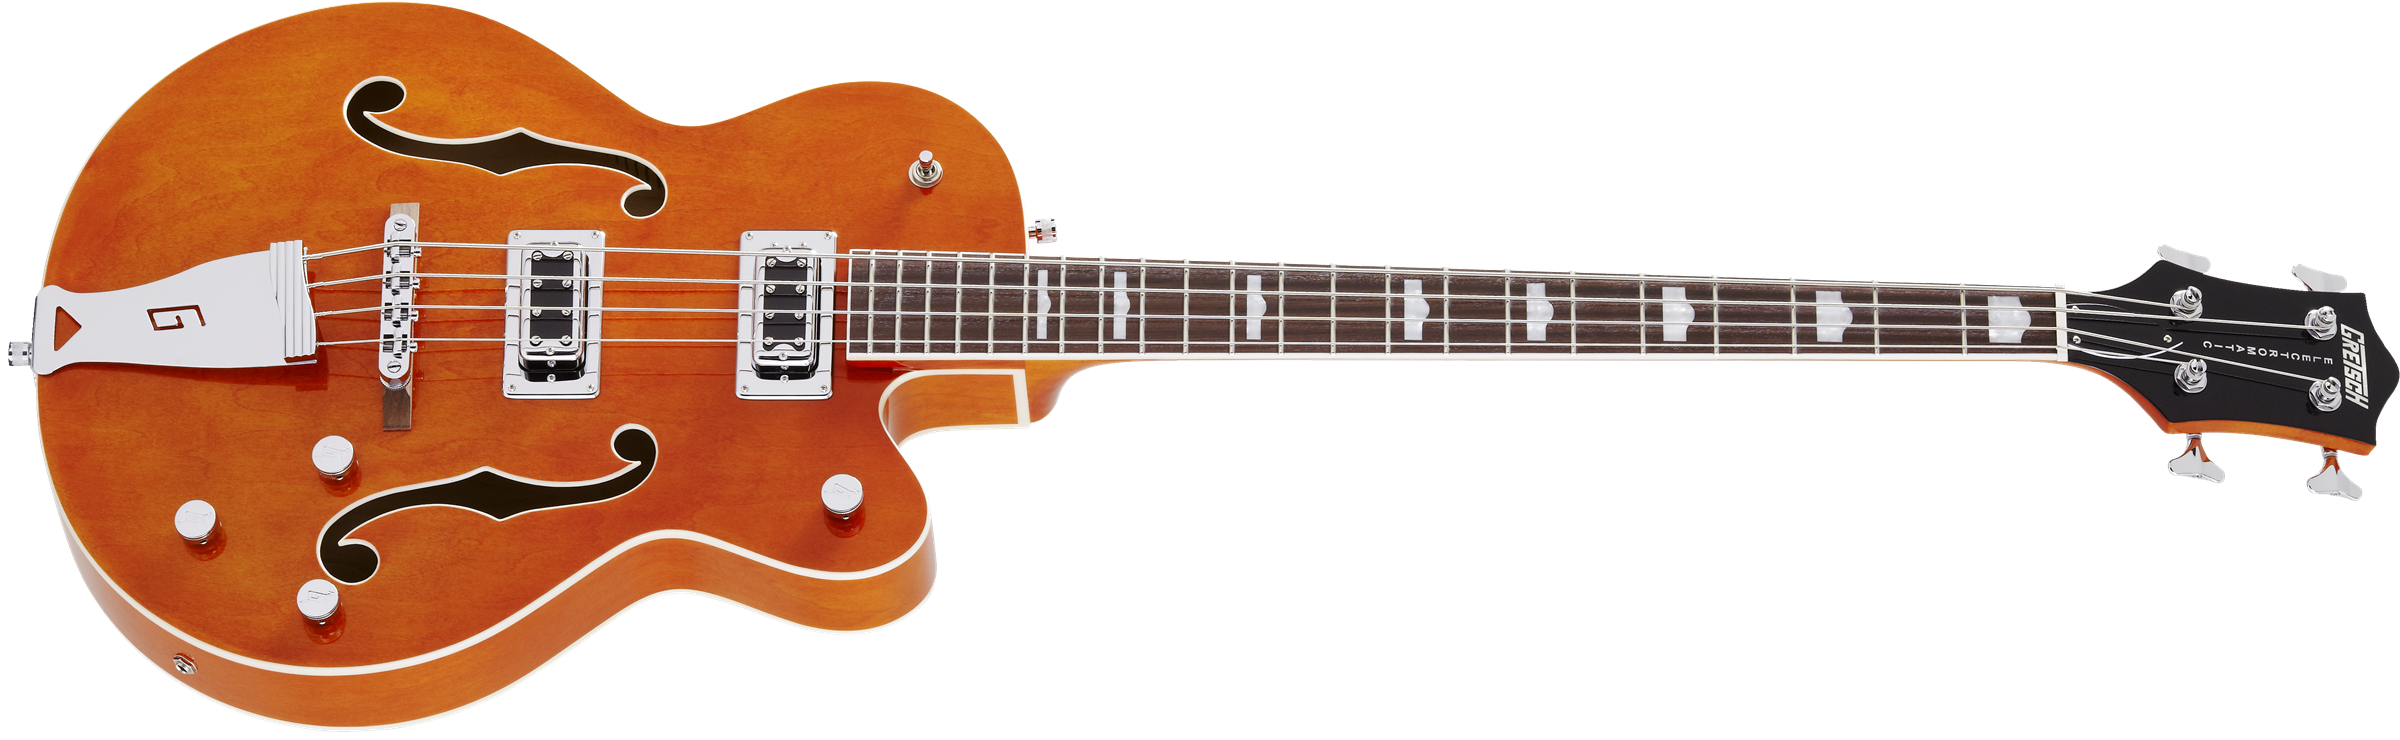 Gretsch G5440ls Long Scale Bass Electromatic Hollow Orange - Orange - Bajo eléctrico semi caja - Variation 1